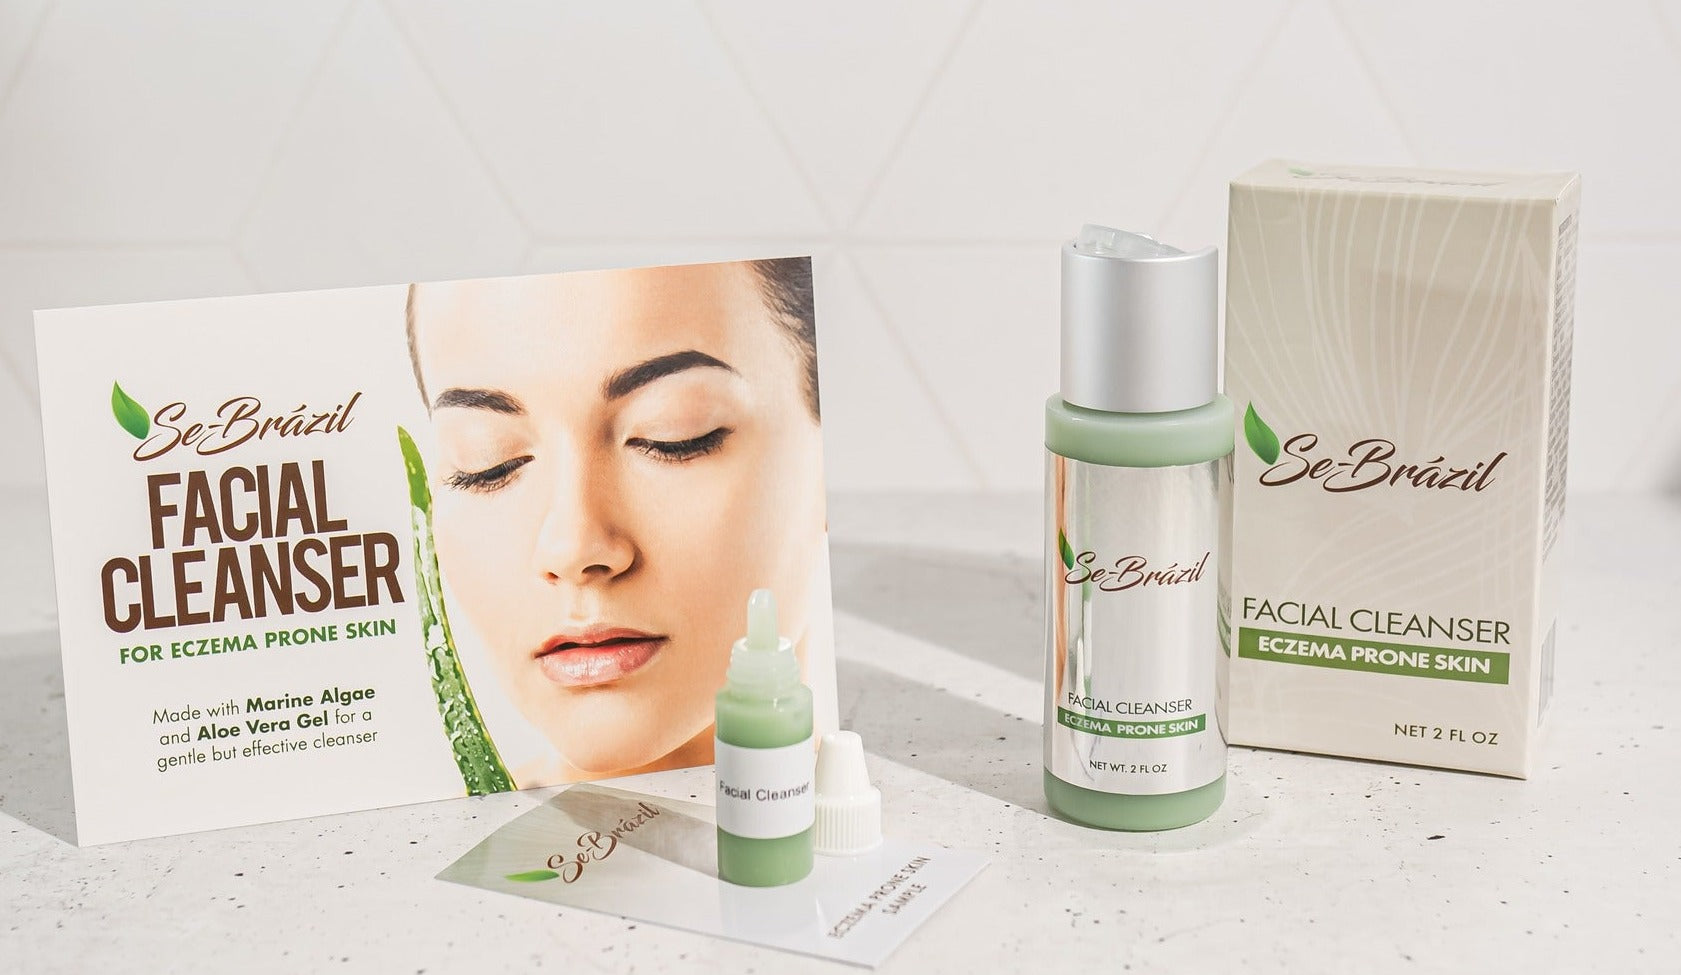 Se-Brazil Facial Cleanser for Eczema Prone Skin 2oz